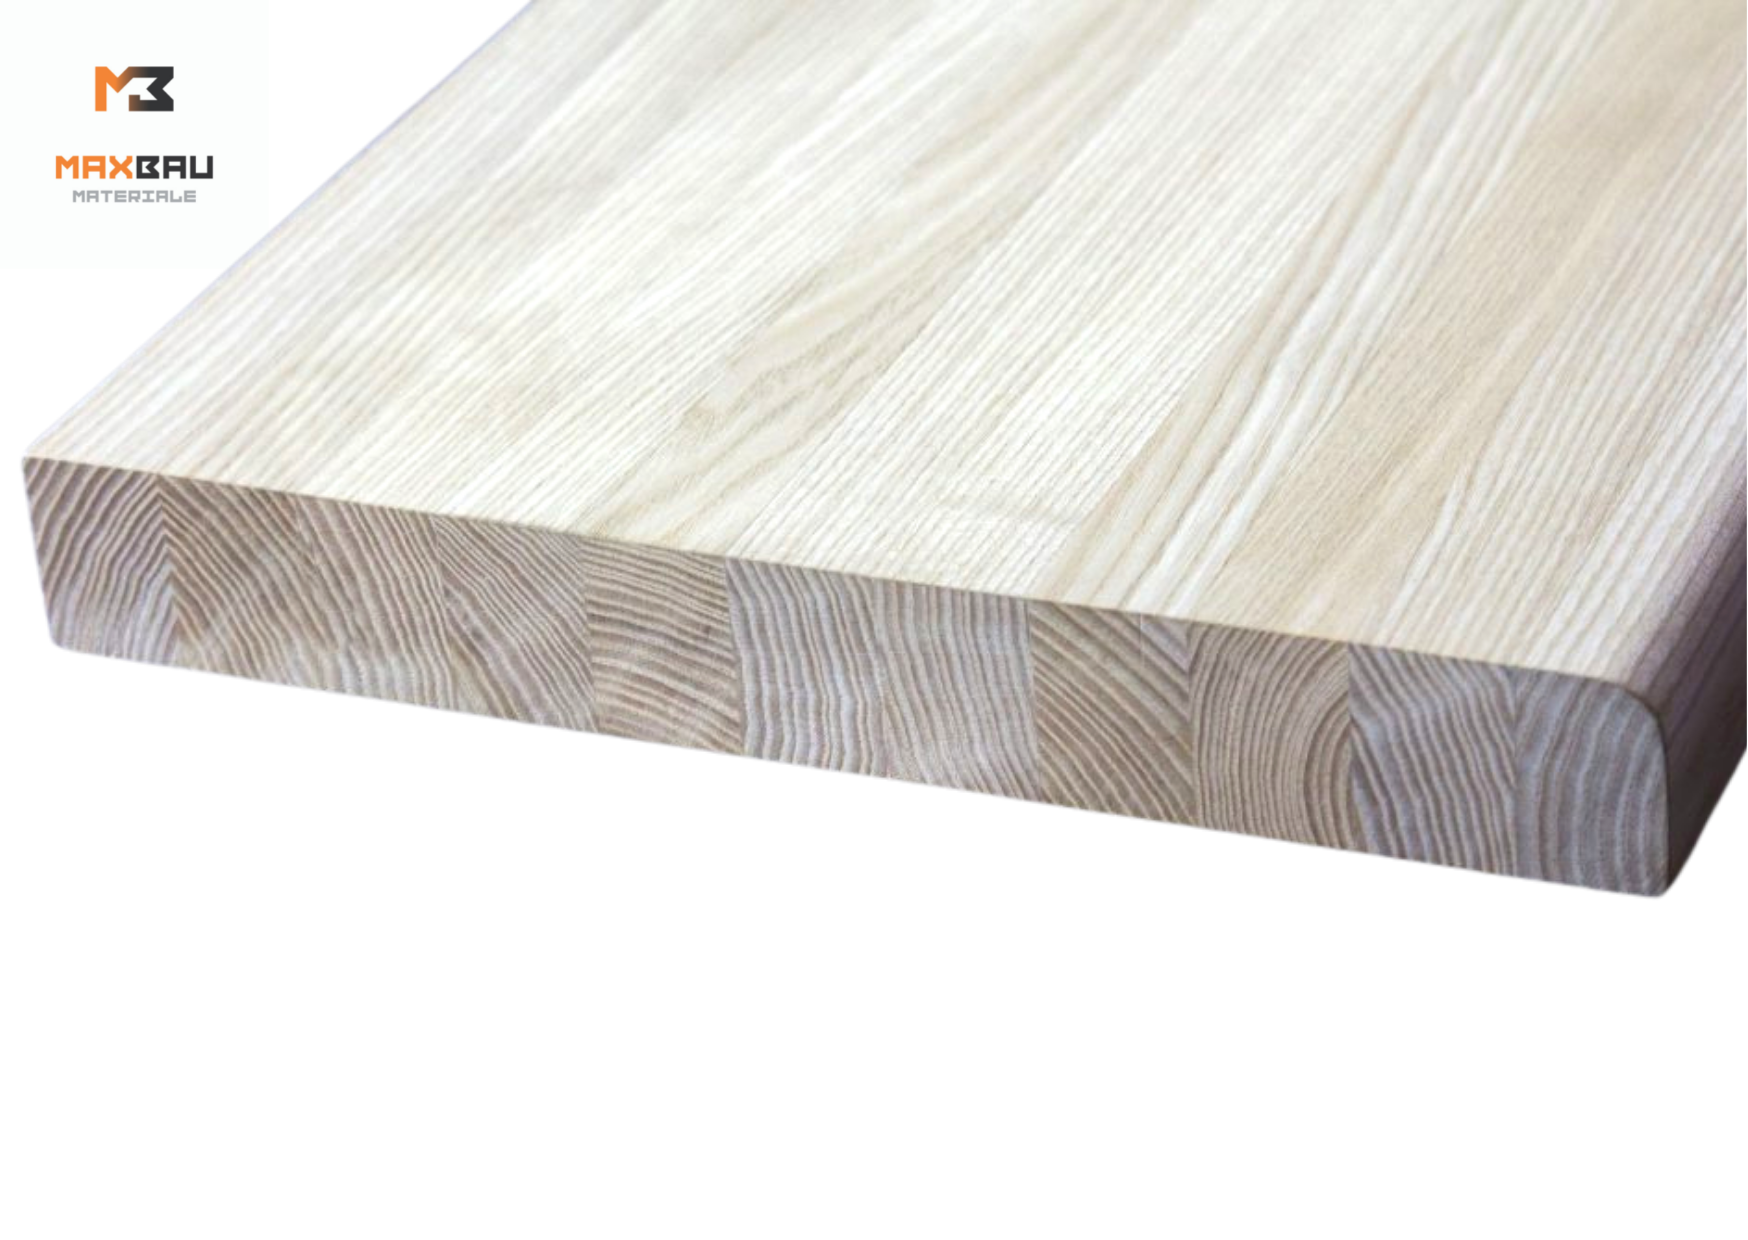 Plates of glued wood - MaxBau wooden plate glued 1200 x 200 x 28 mm class AB, https:maxbau.ro